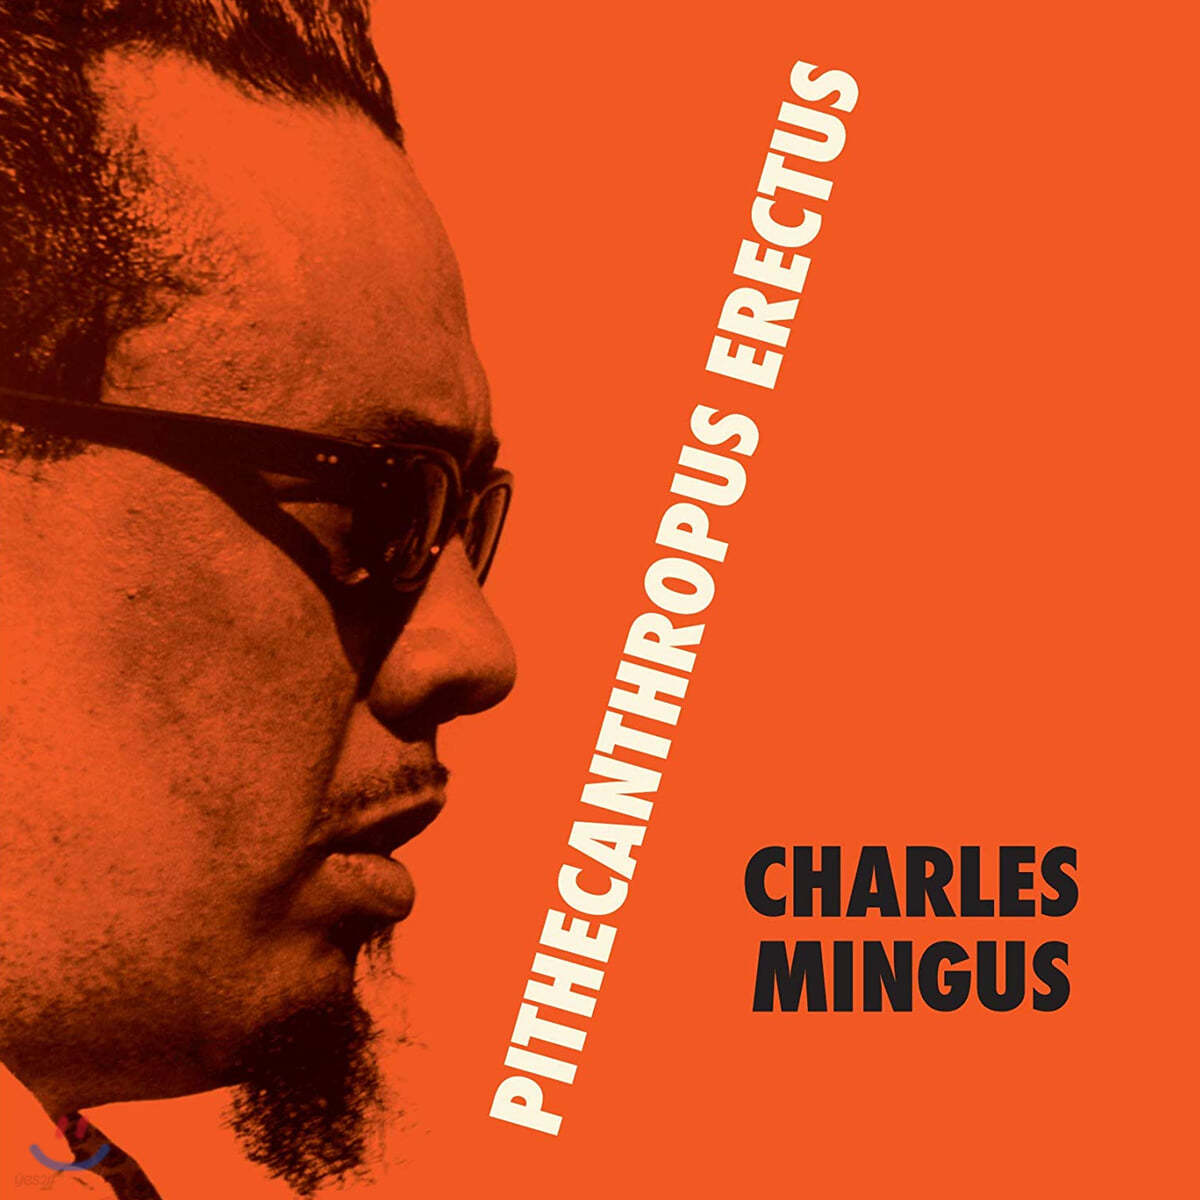 Charles Mingus (찰스 밍거스) - Pithecanthropus Erectus [퍼플 컬러 LP]